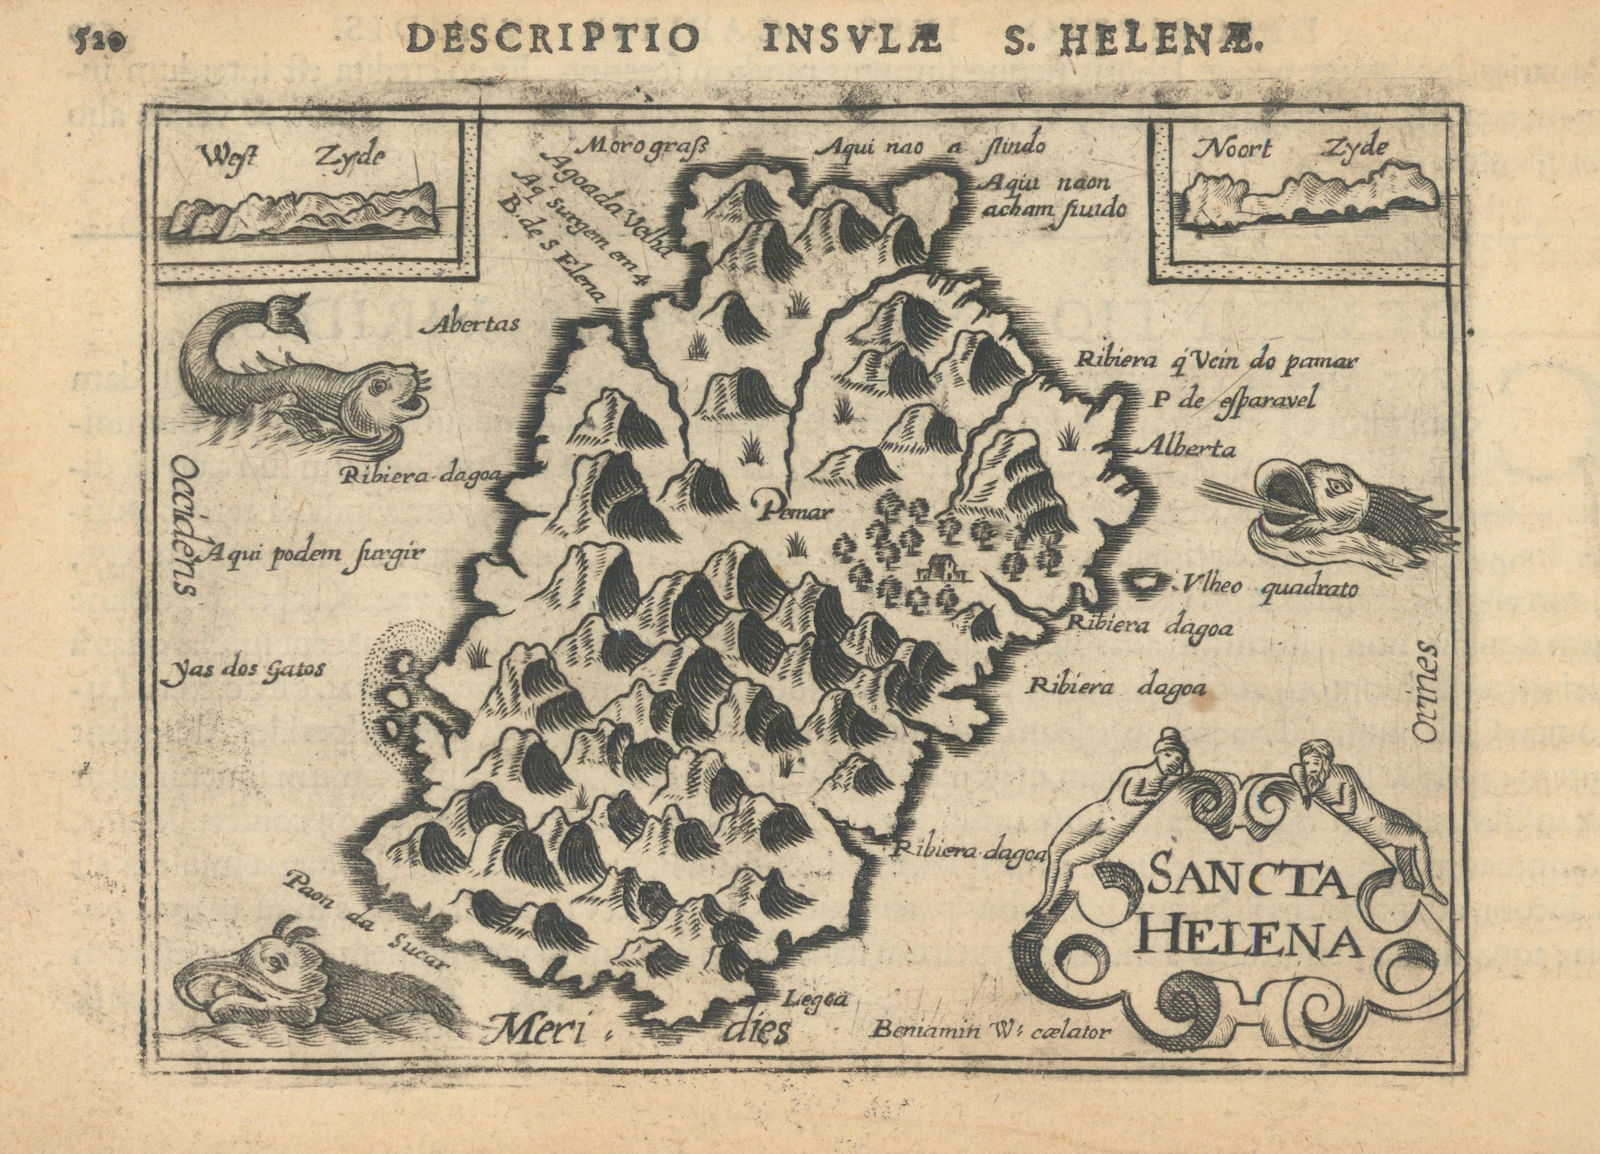 Insulae S. Helenae / Sancta Helena by Bertius / Langenes. Saint Helena 1603 map